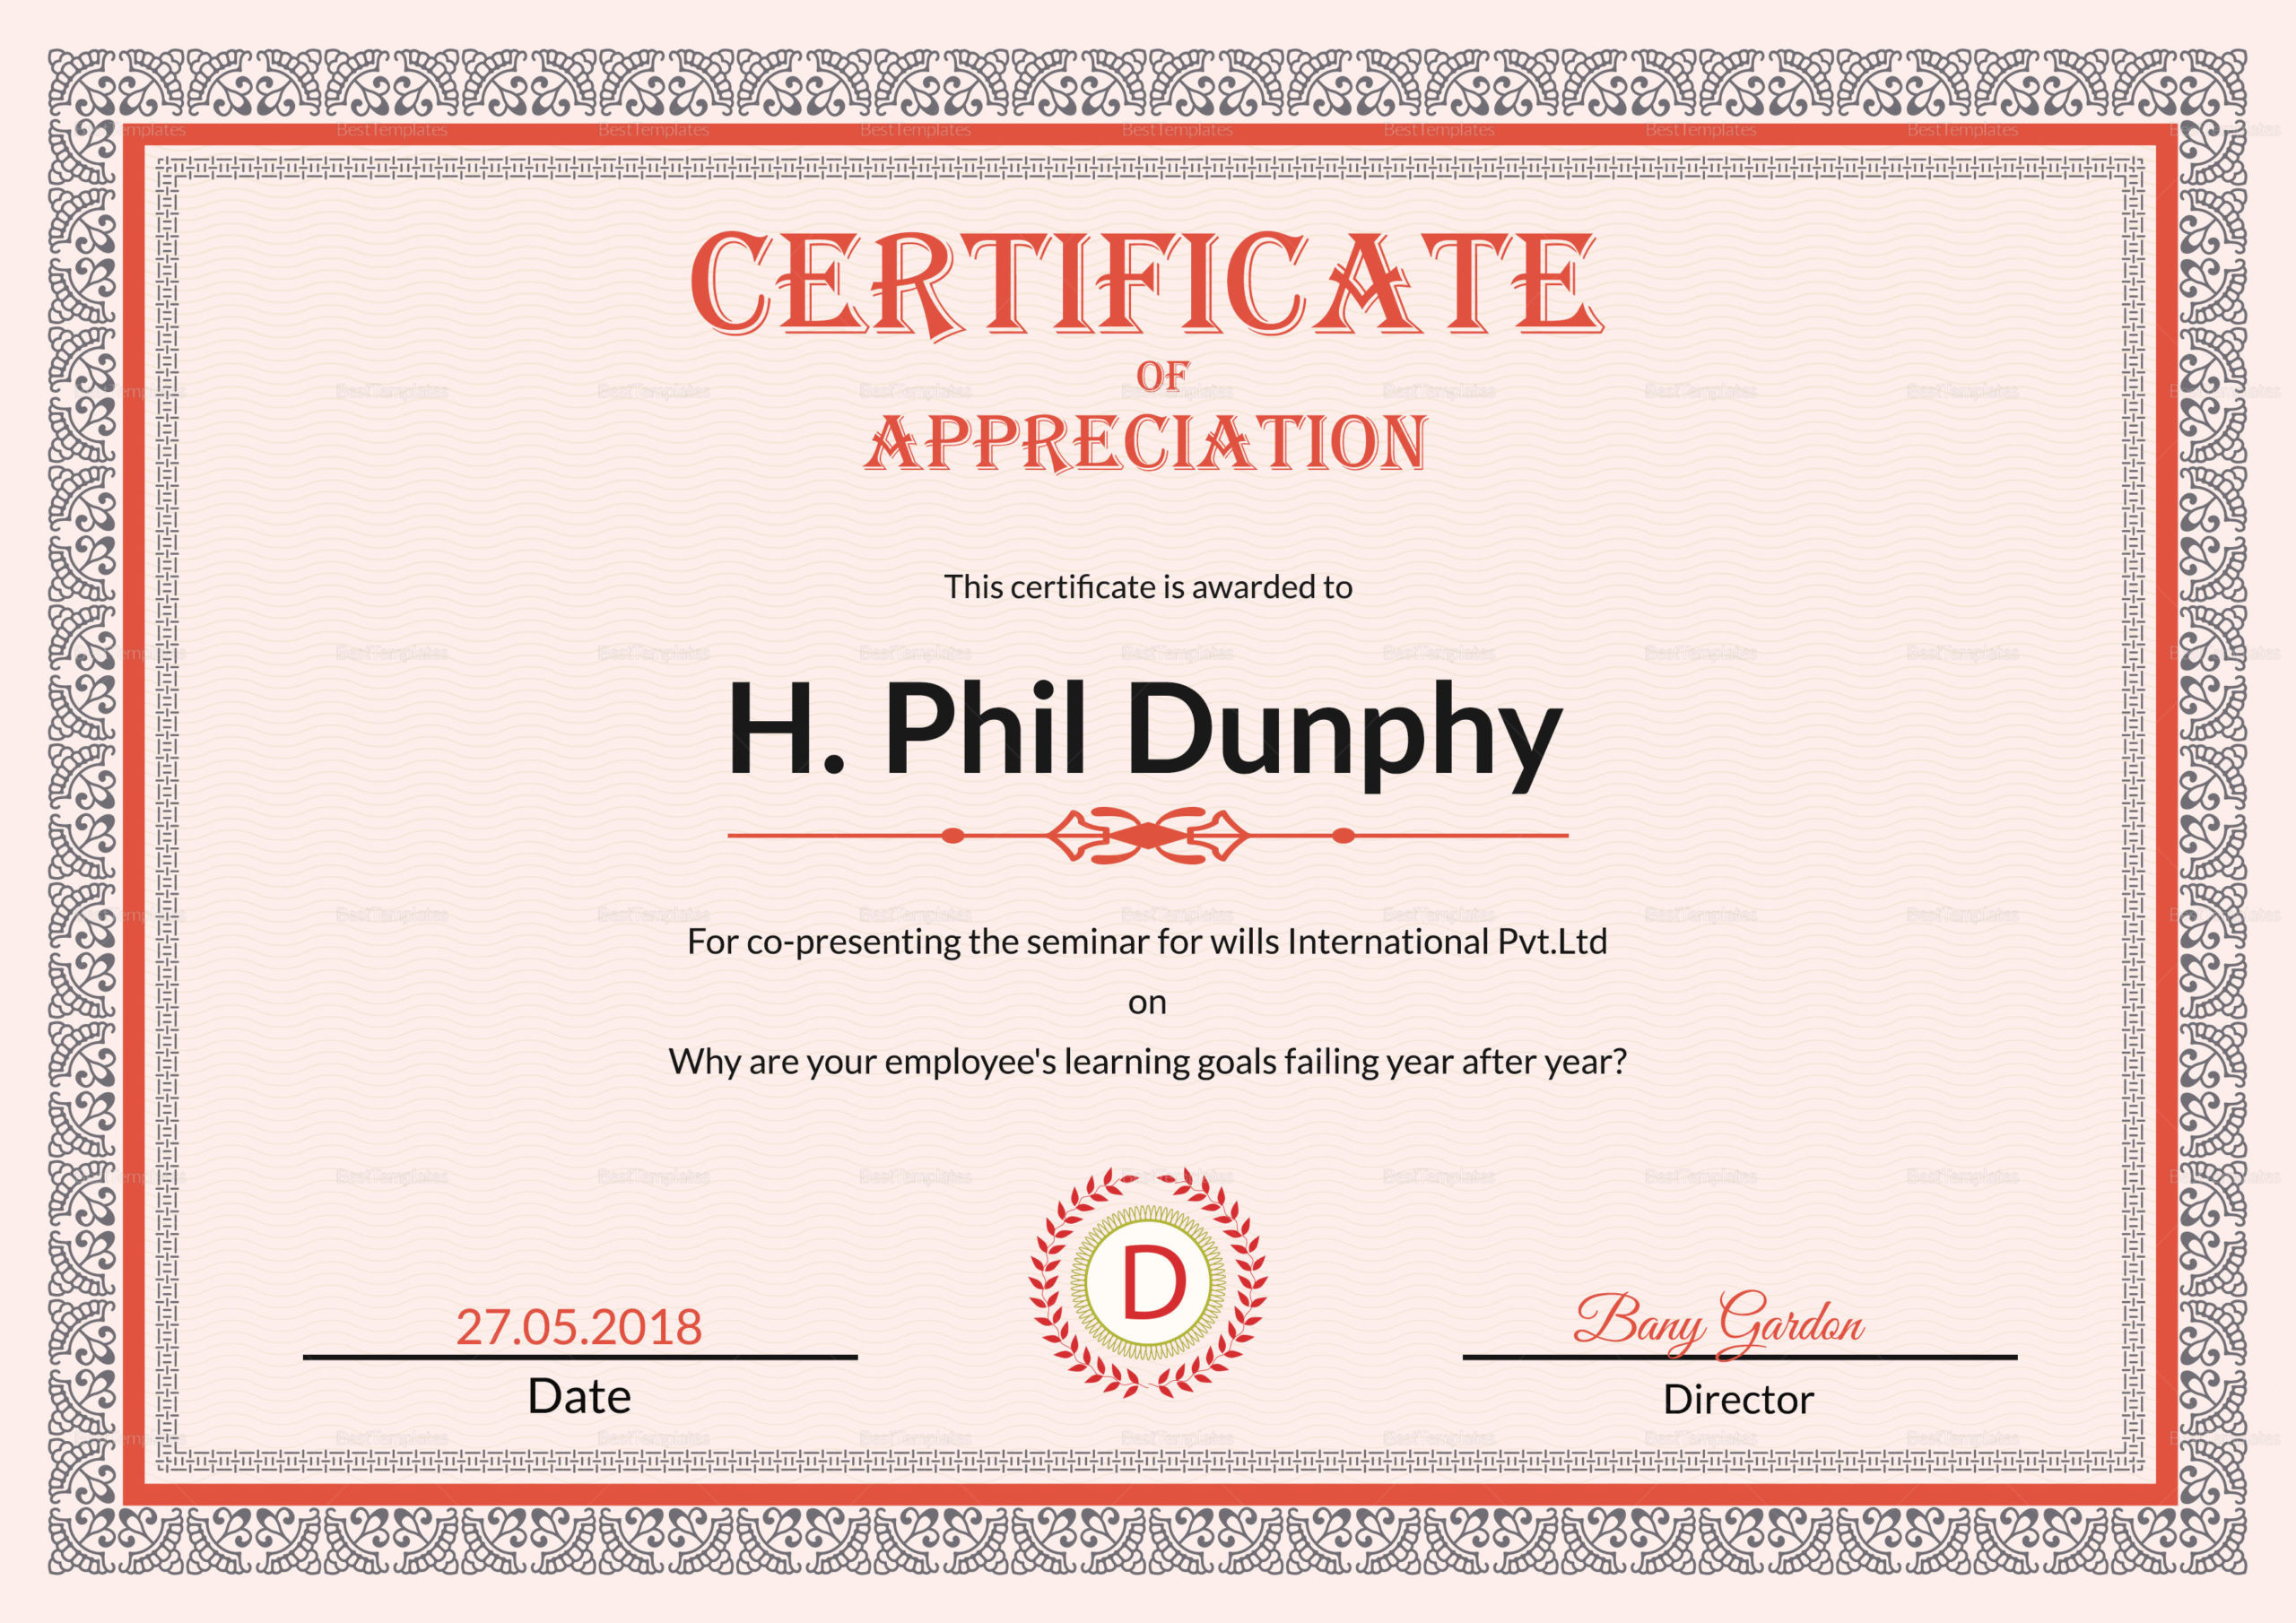 Certificate Of Appreciation Design Template In Psd Word With Free Certificate Of Appreciation Template Word